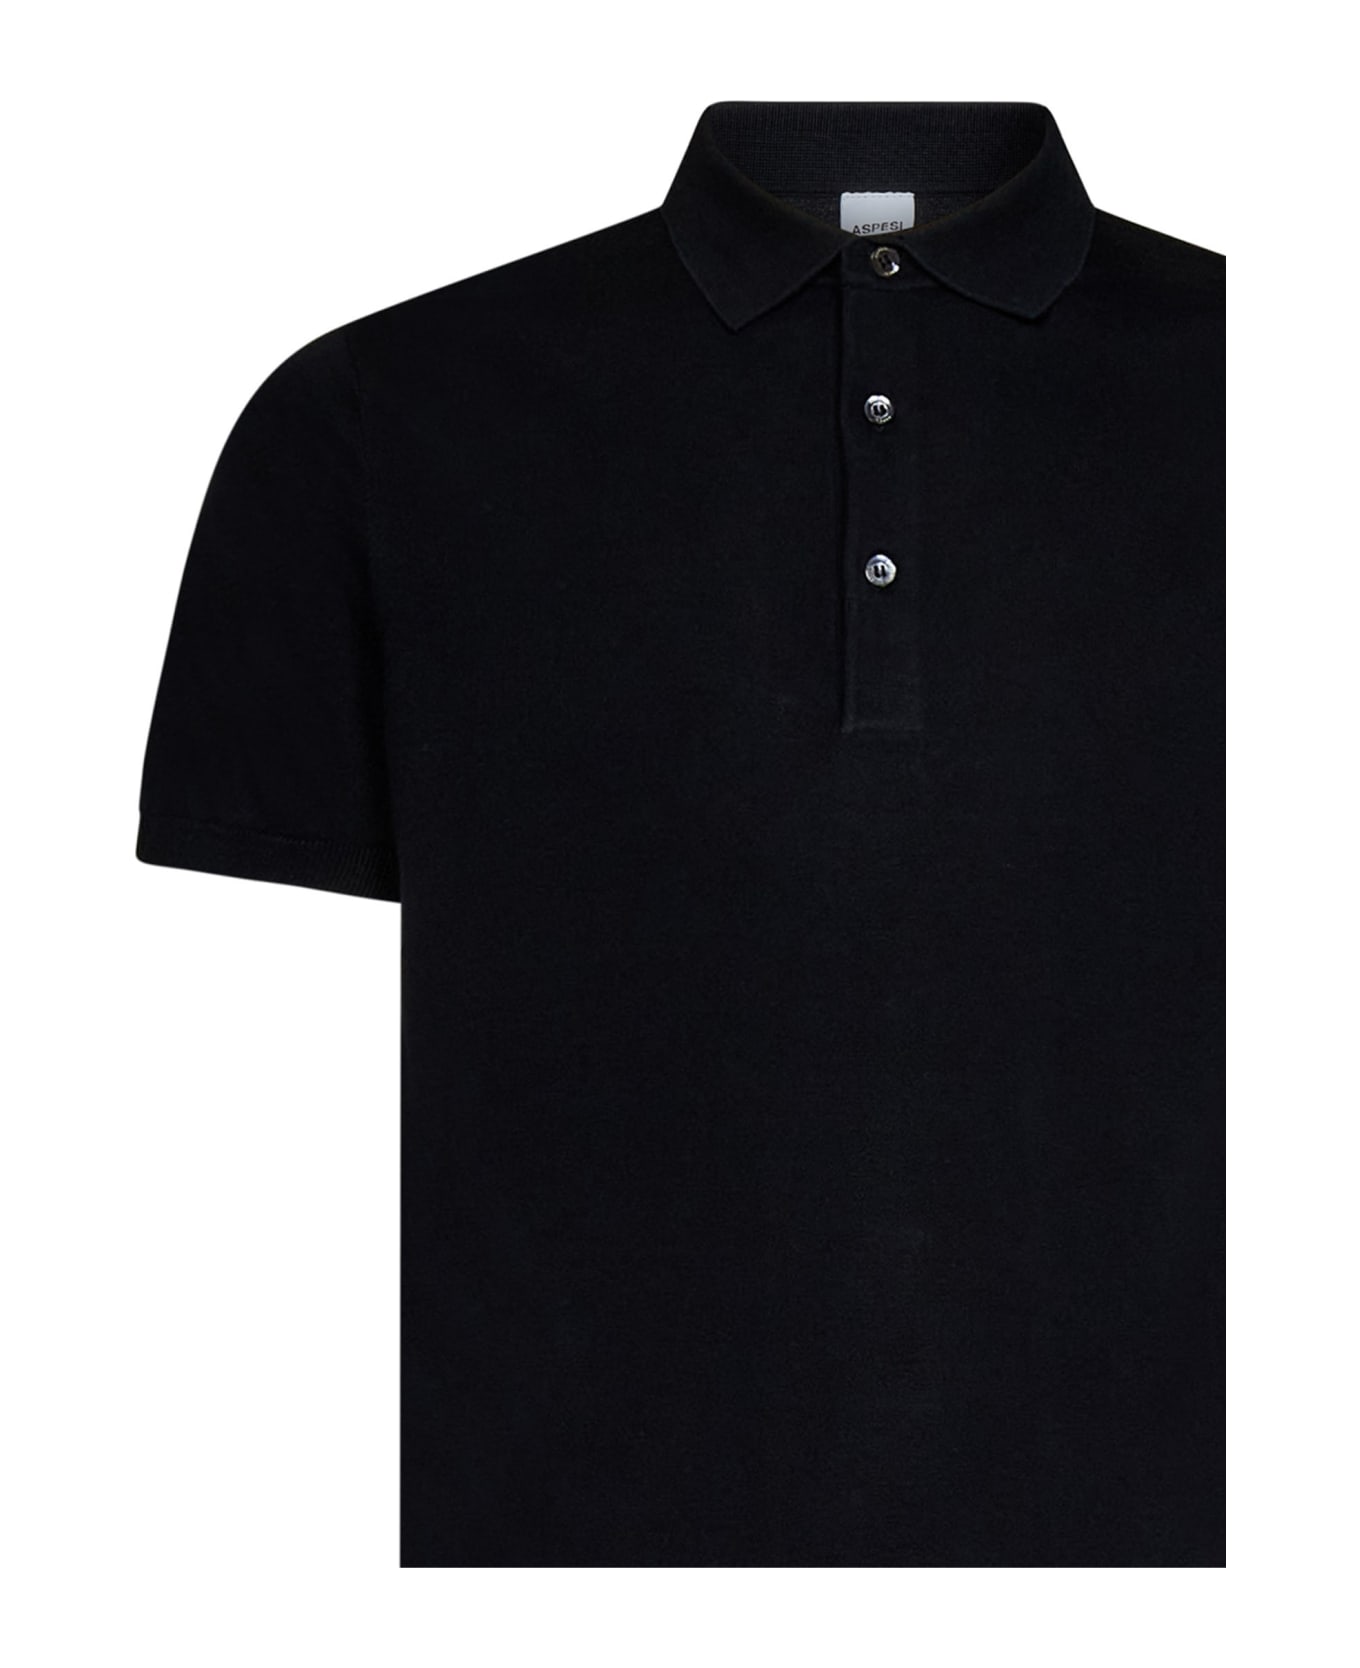 Aspesi Polo Shirt - Black ポロシャツ